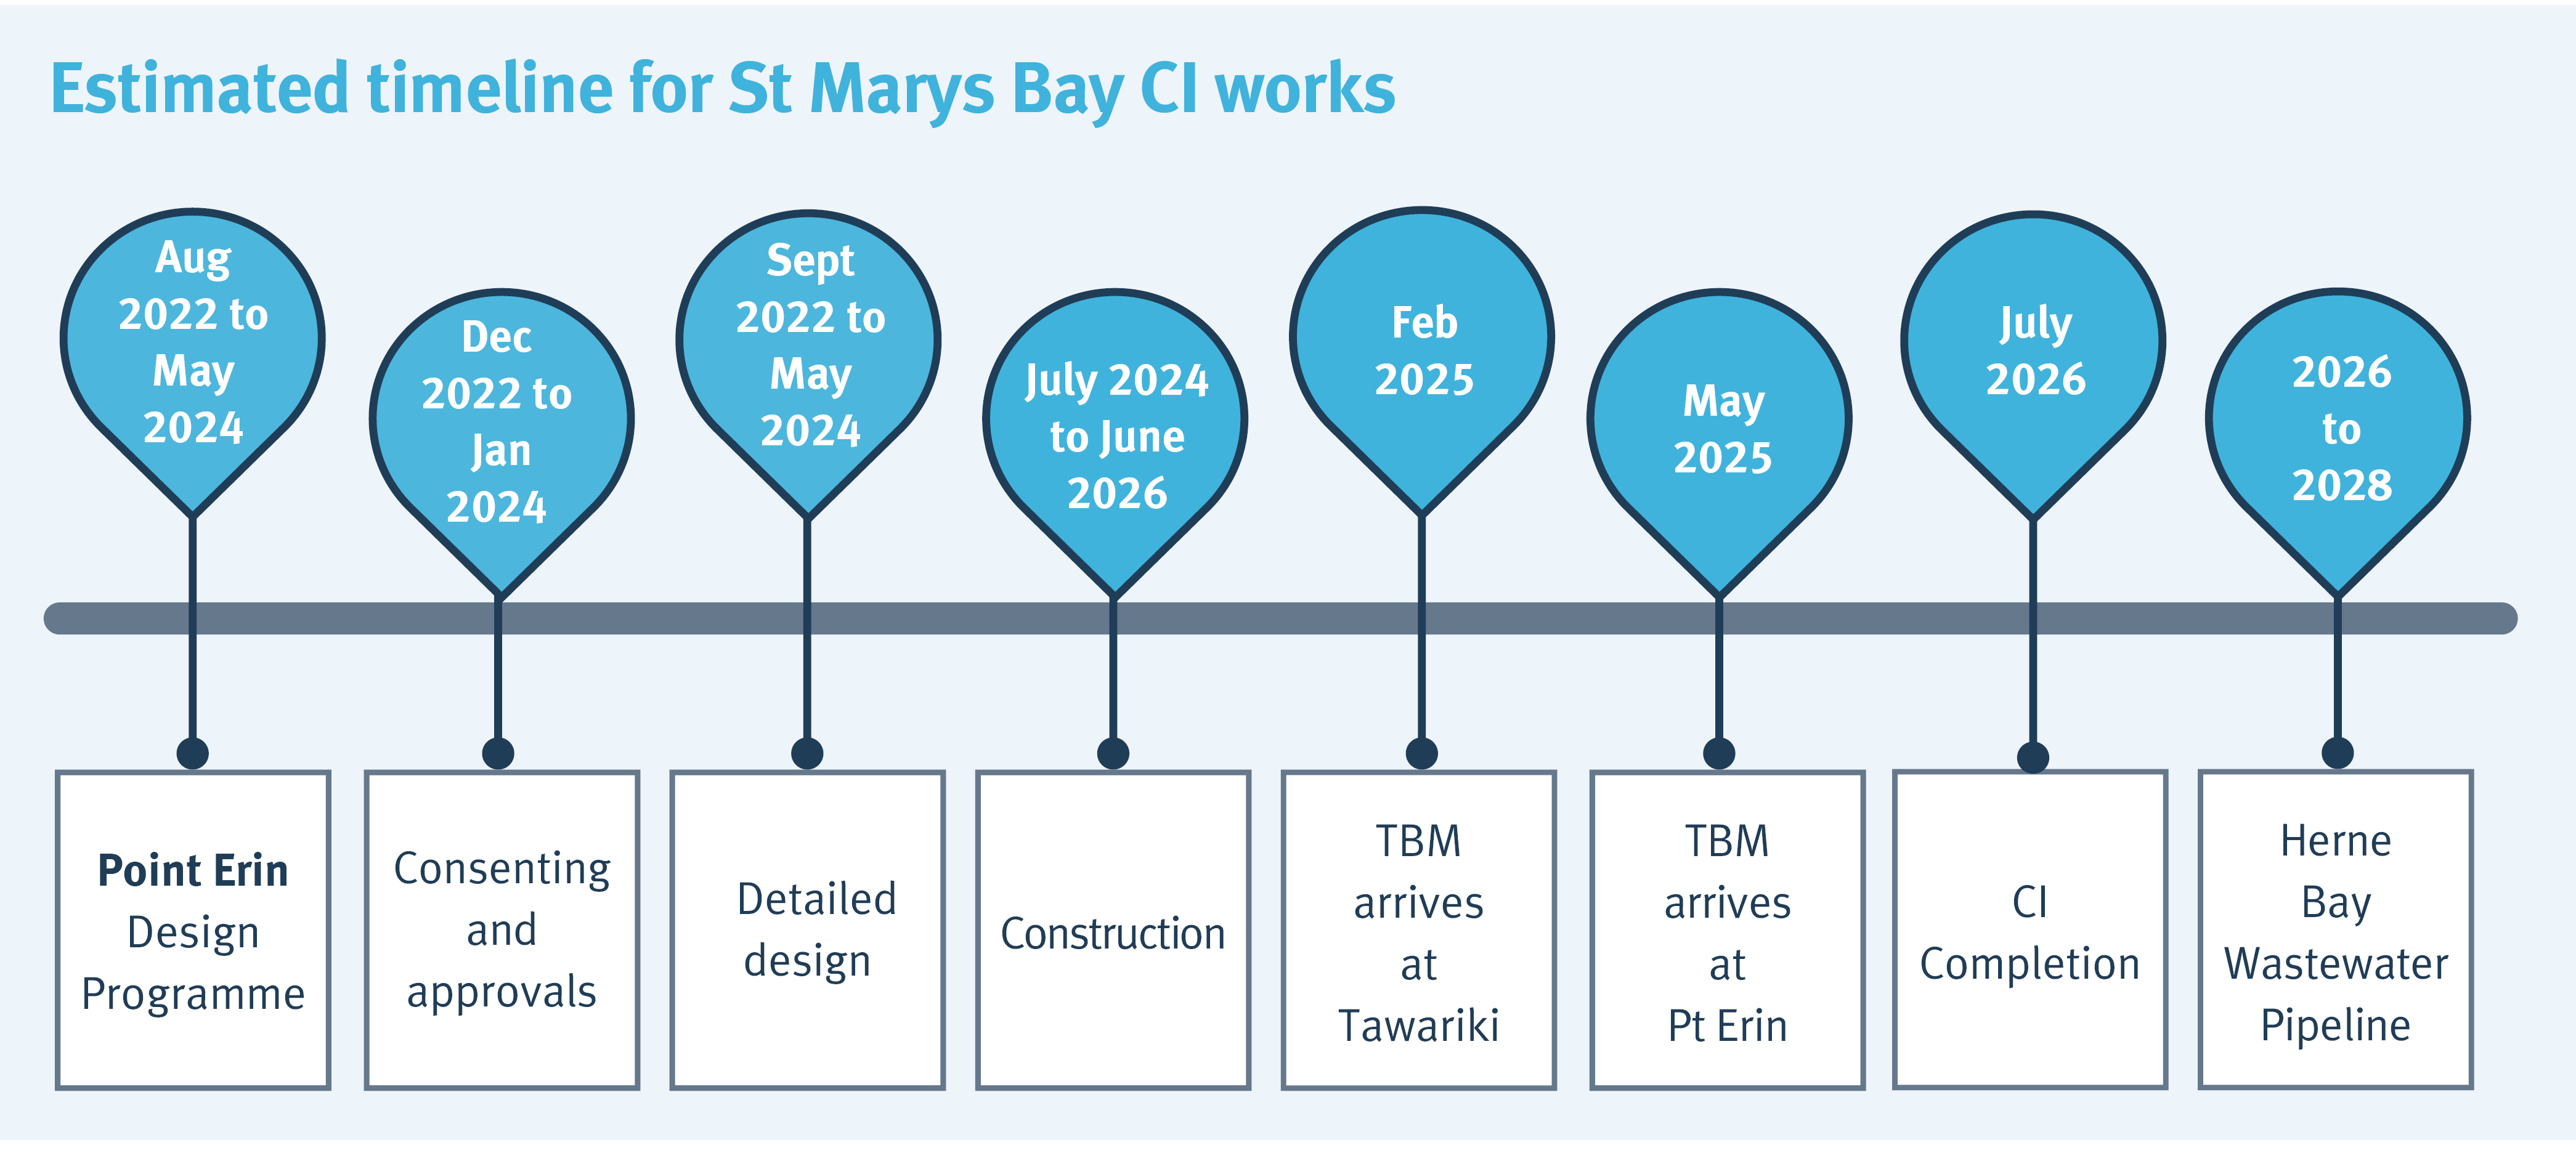 Estimated timeline for St Marys Bay CI works